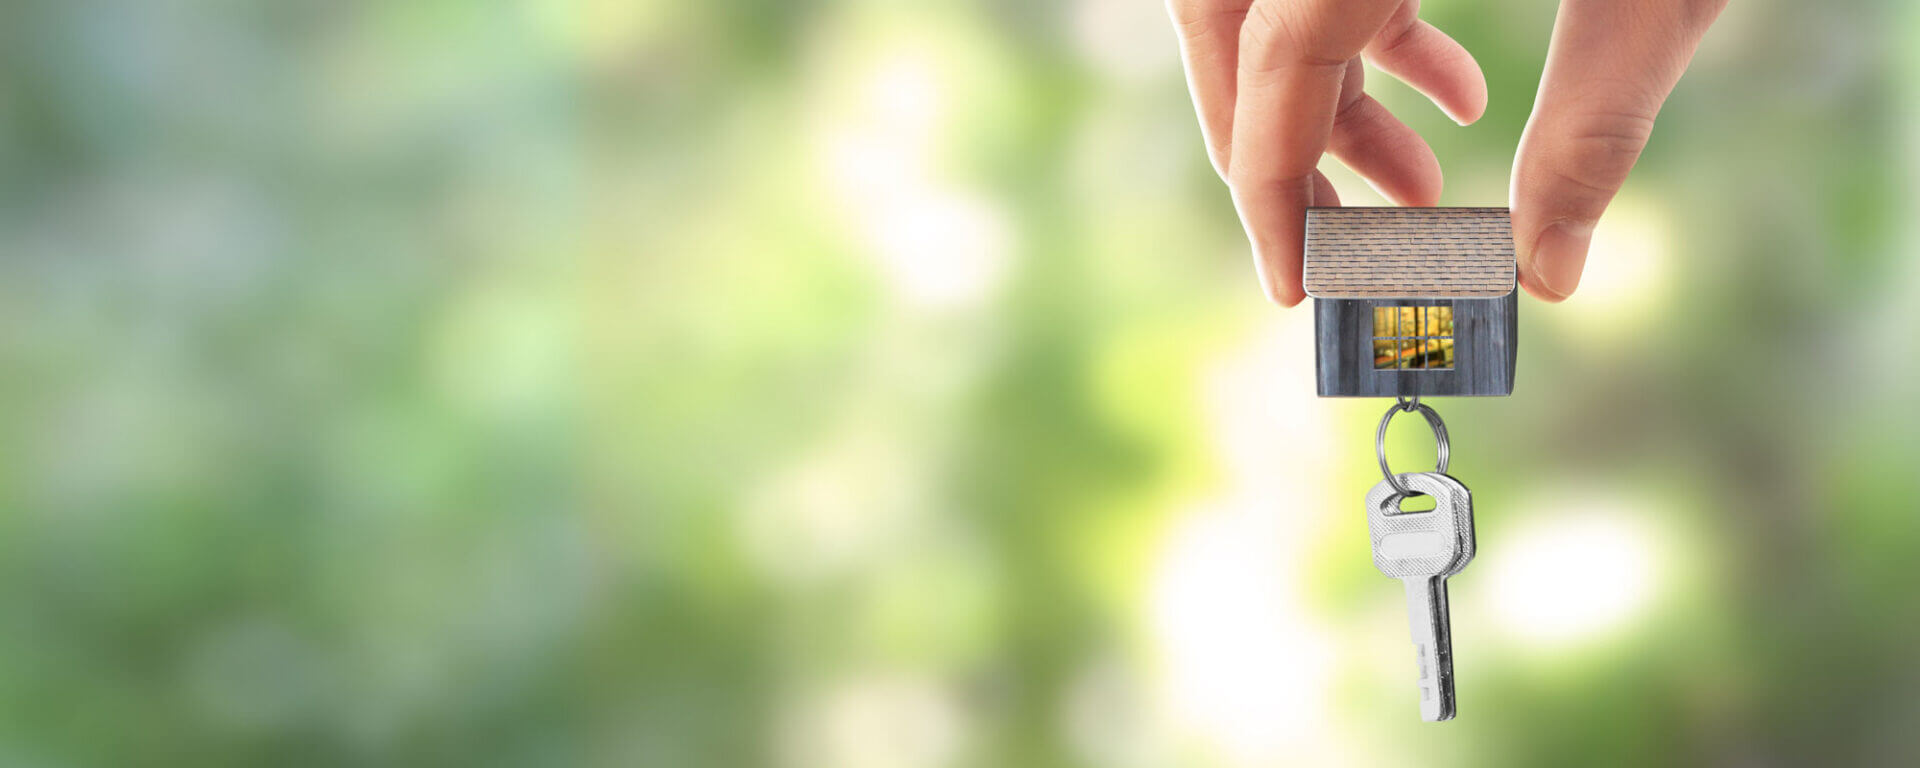 Real Estate Agent Handing Over House Keys In Hand